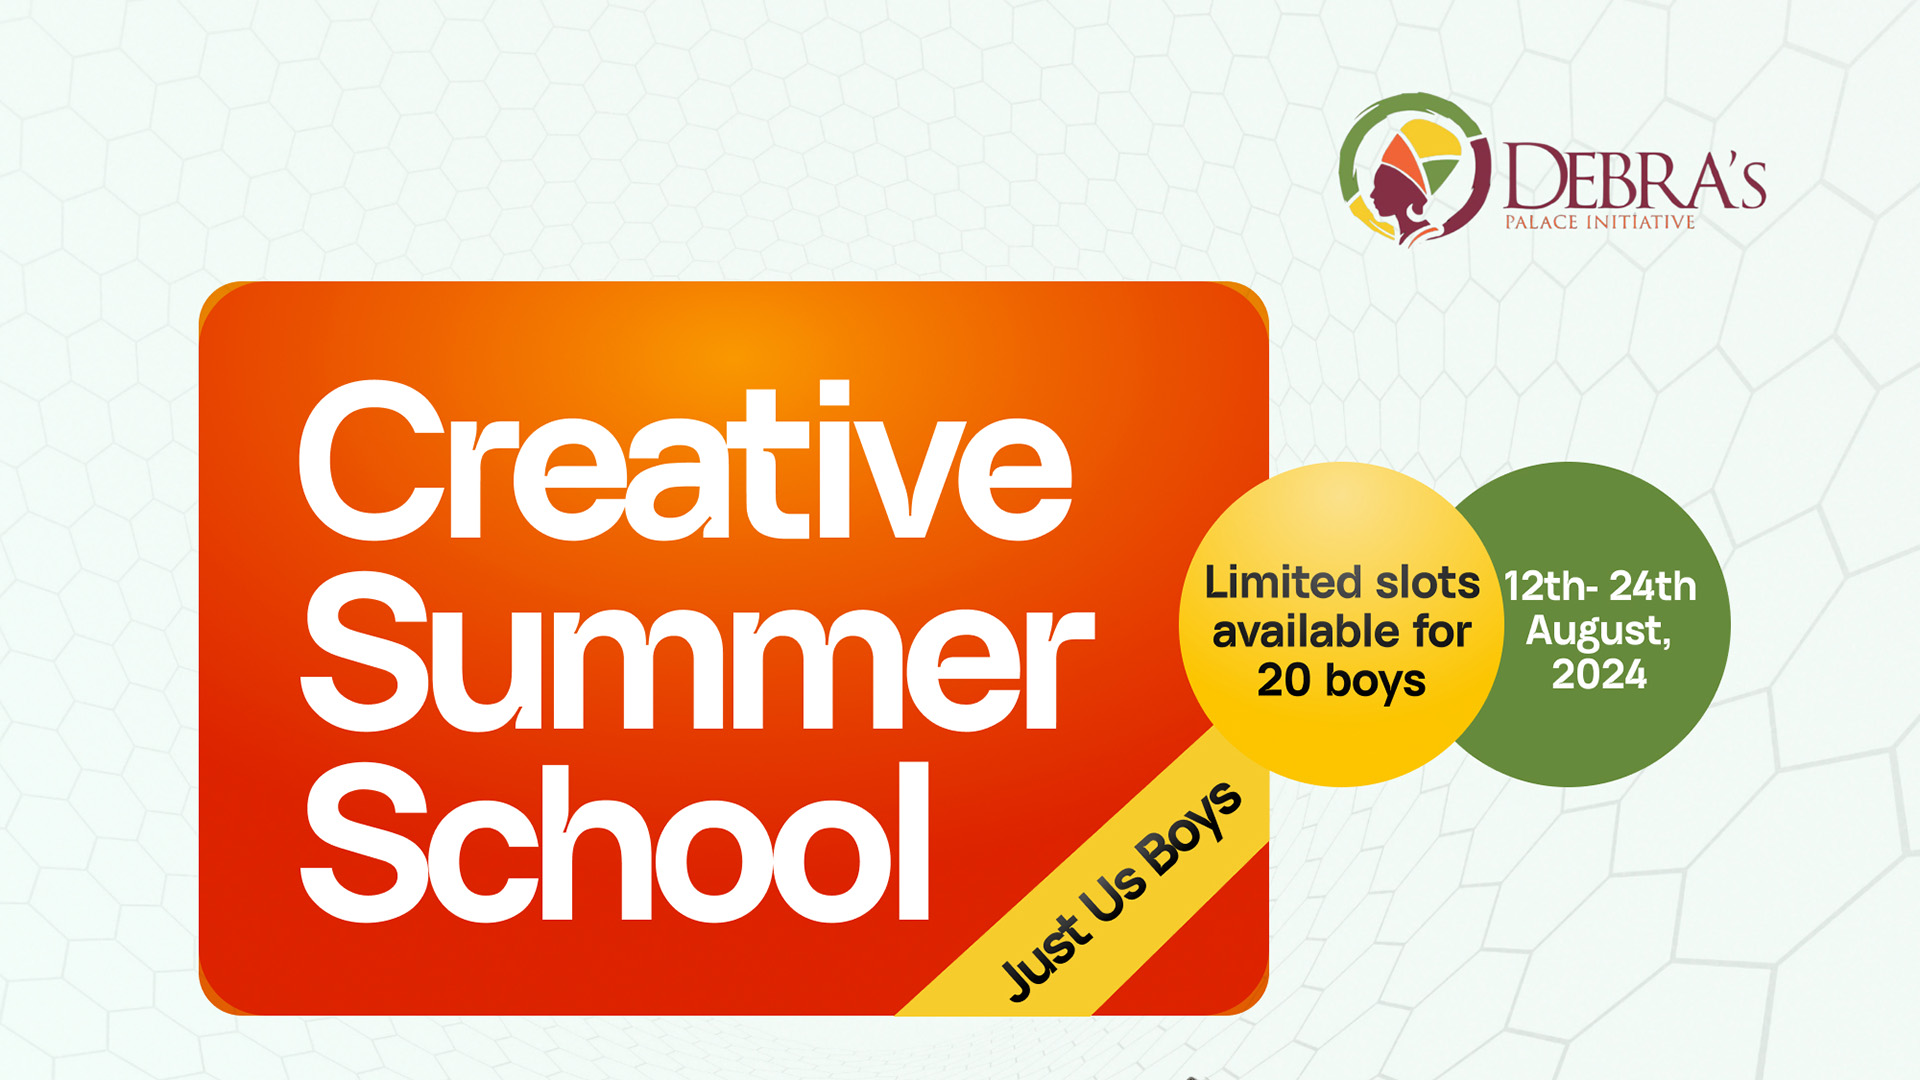 Debras Palace Initiative: Creative Summer School